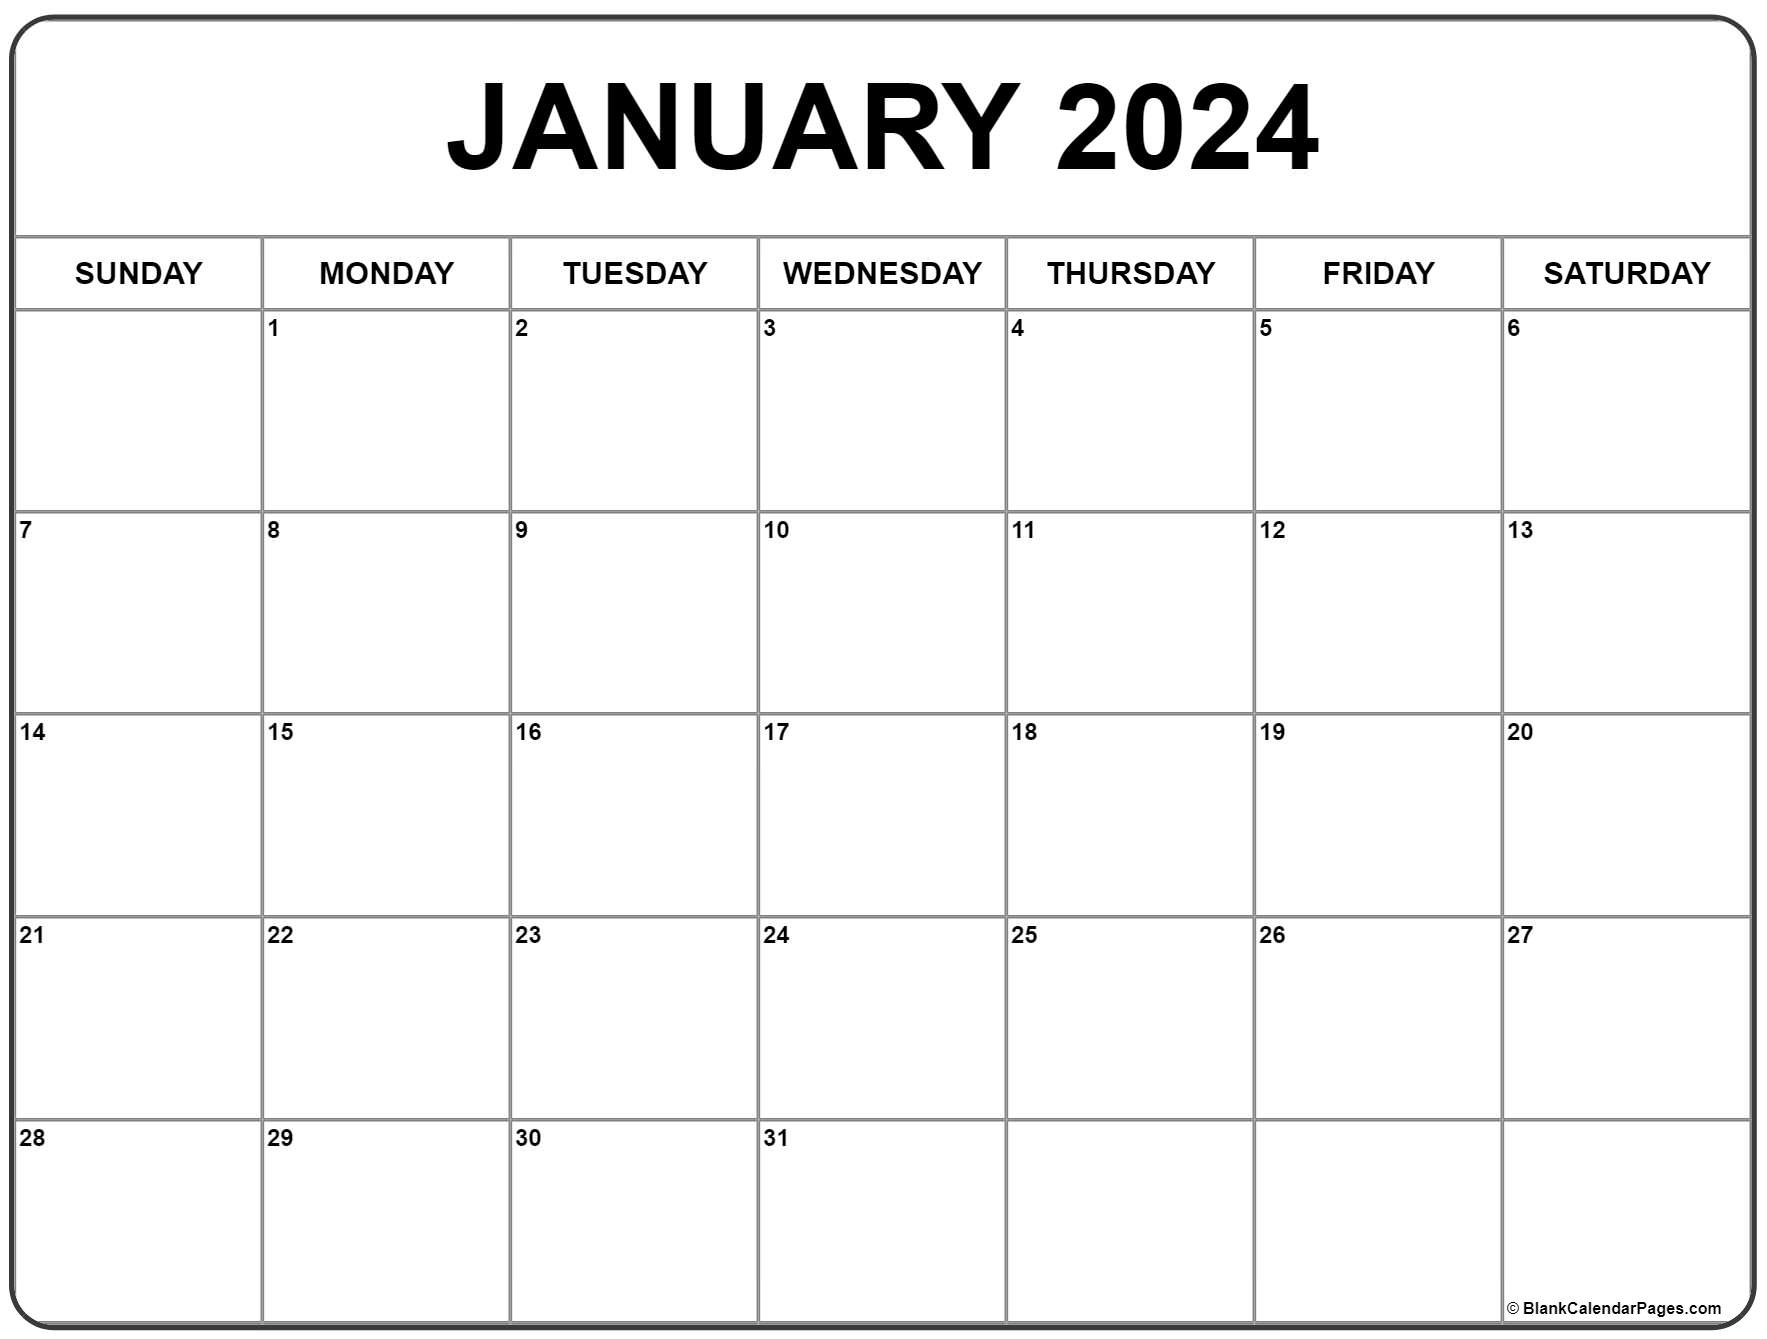 January 2024 Calendar | Free Printable Calendar for Monthly Calendar 2024 Printable Free